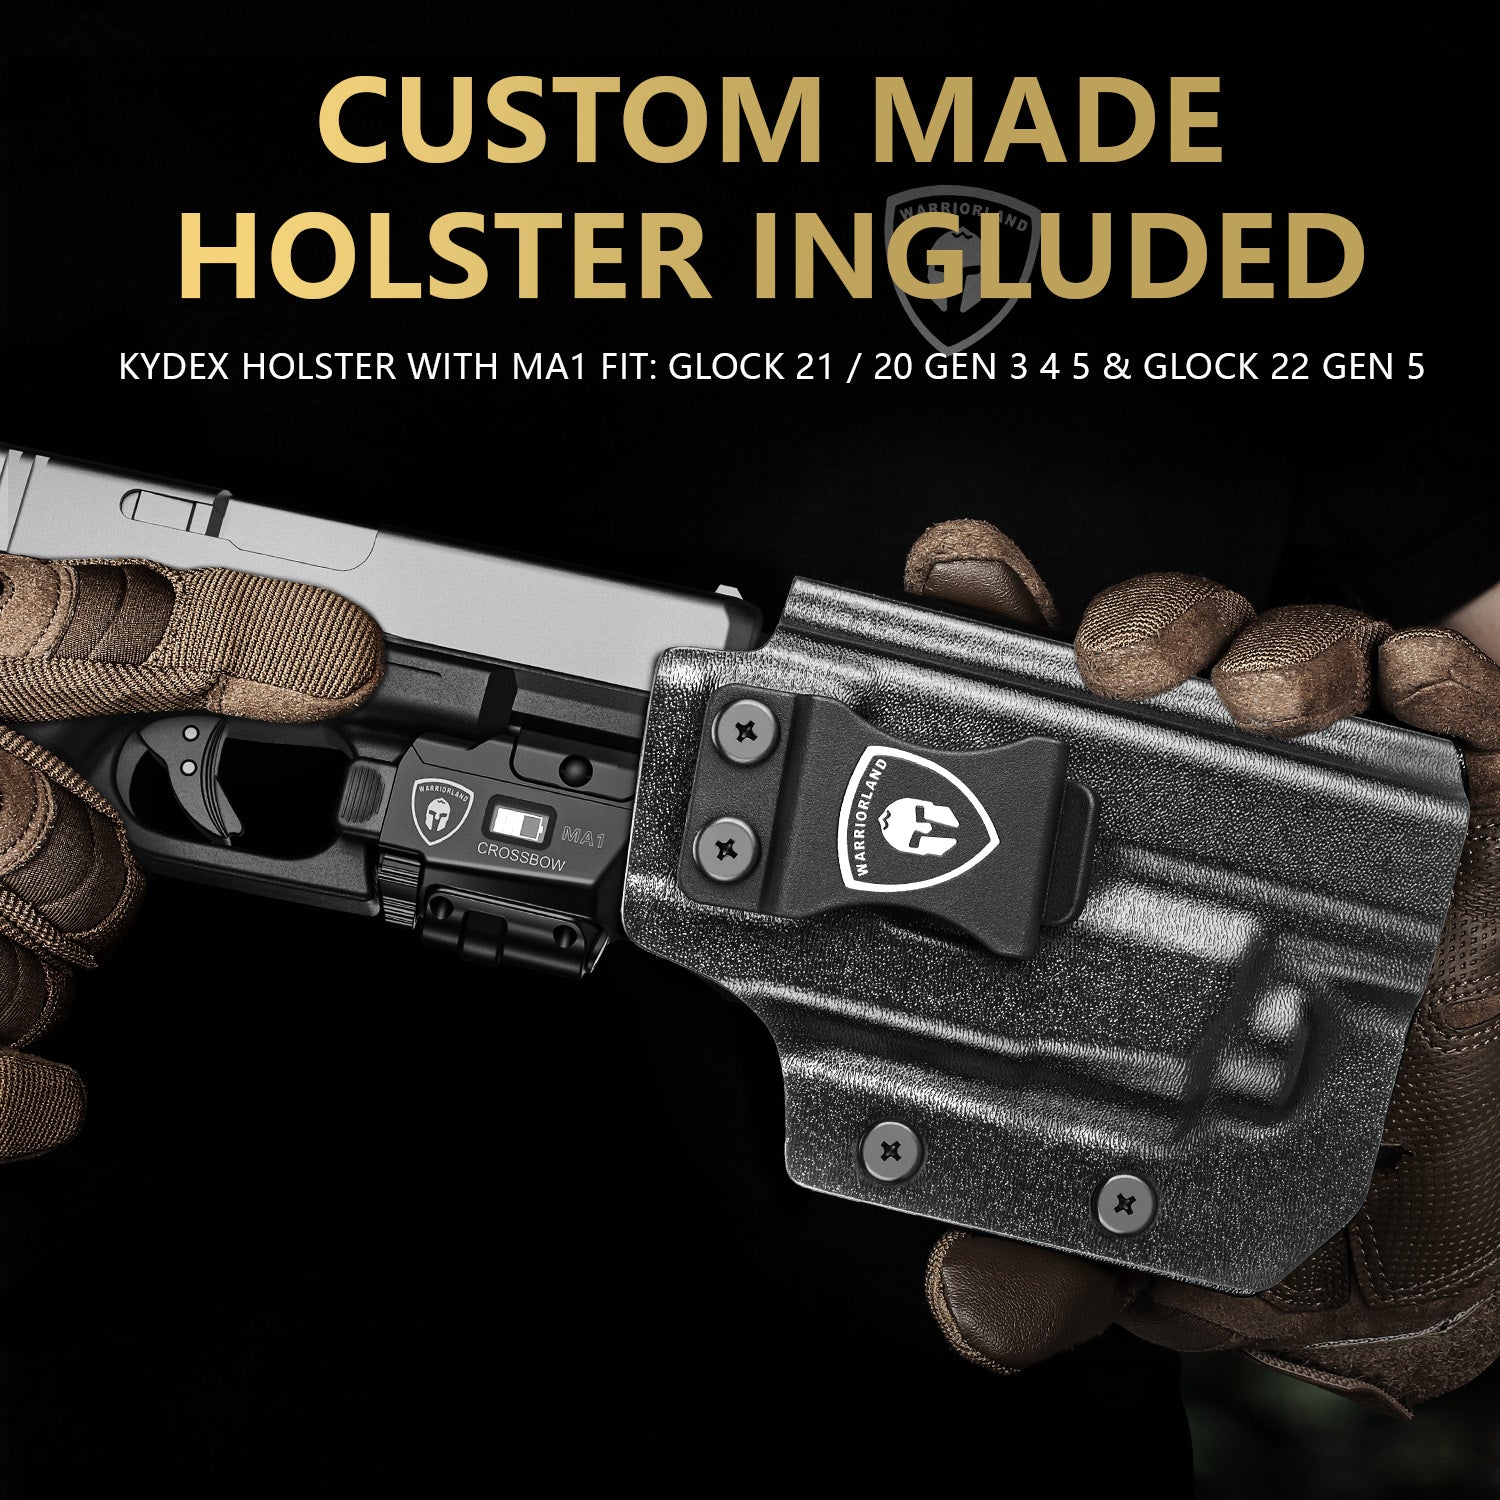 Universal Light Laser Combo with Glock 21 / G20 Gen 3 4 5 & Glock 22 Gen 5 Holster, Tactical Green Laser Light USB Rechargeable, Screen Displays Battery Status, Crossbow MA1 w/ G21 Holster|WARRIORLAND